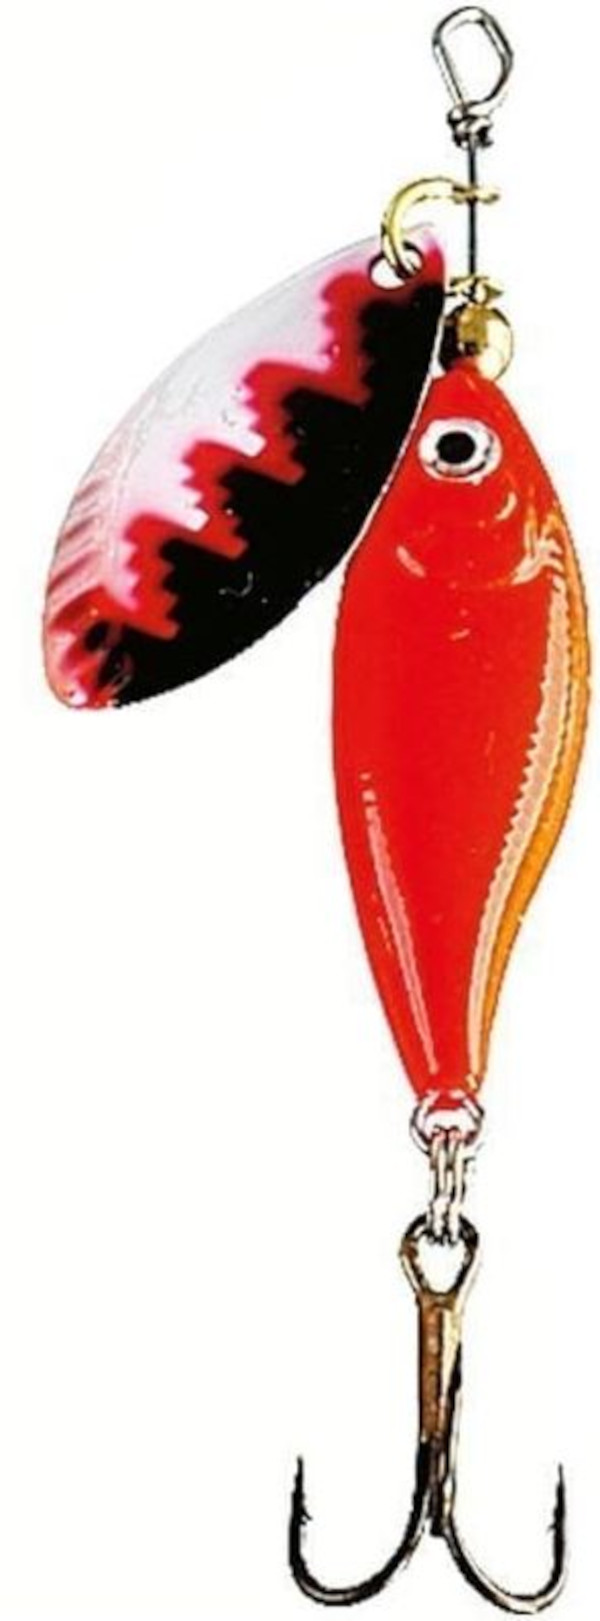 Fladen Loket spinner - Ambulance body. White/Red/Black spoon